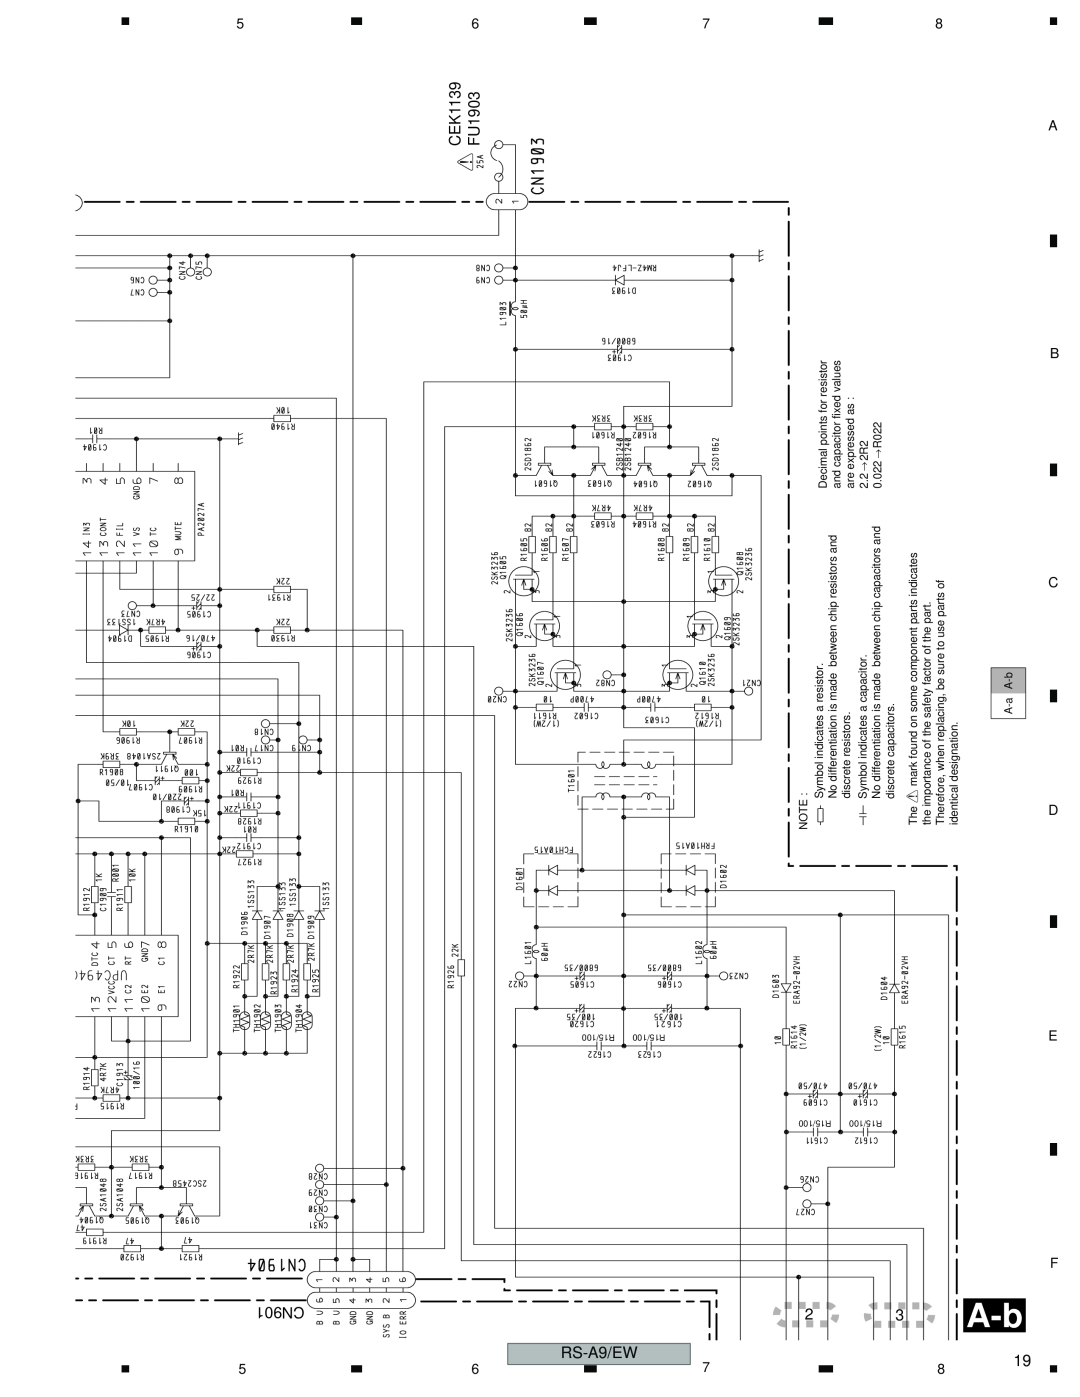 Pioneer RS-A9/EW manual CEK1139 > FU1903, 5 CN901 6, 5 6 7 8 